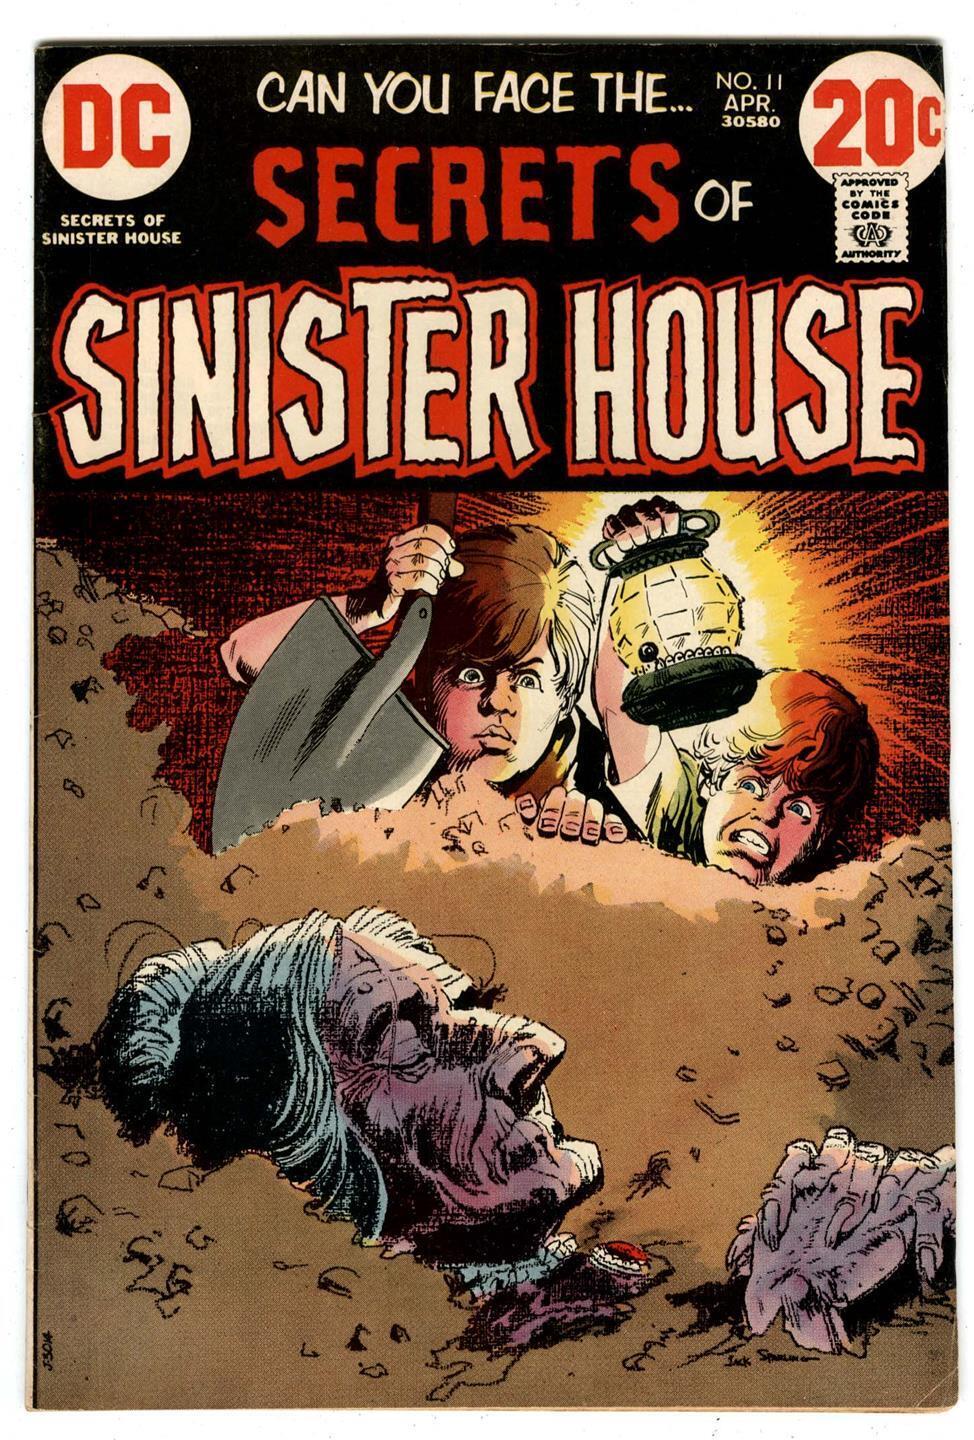 Secrets Of Sinister House #11-DC Comics, April 1973-DC HORROR-Kaluta Aragone Art